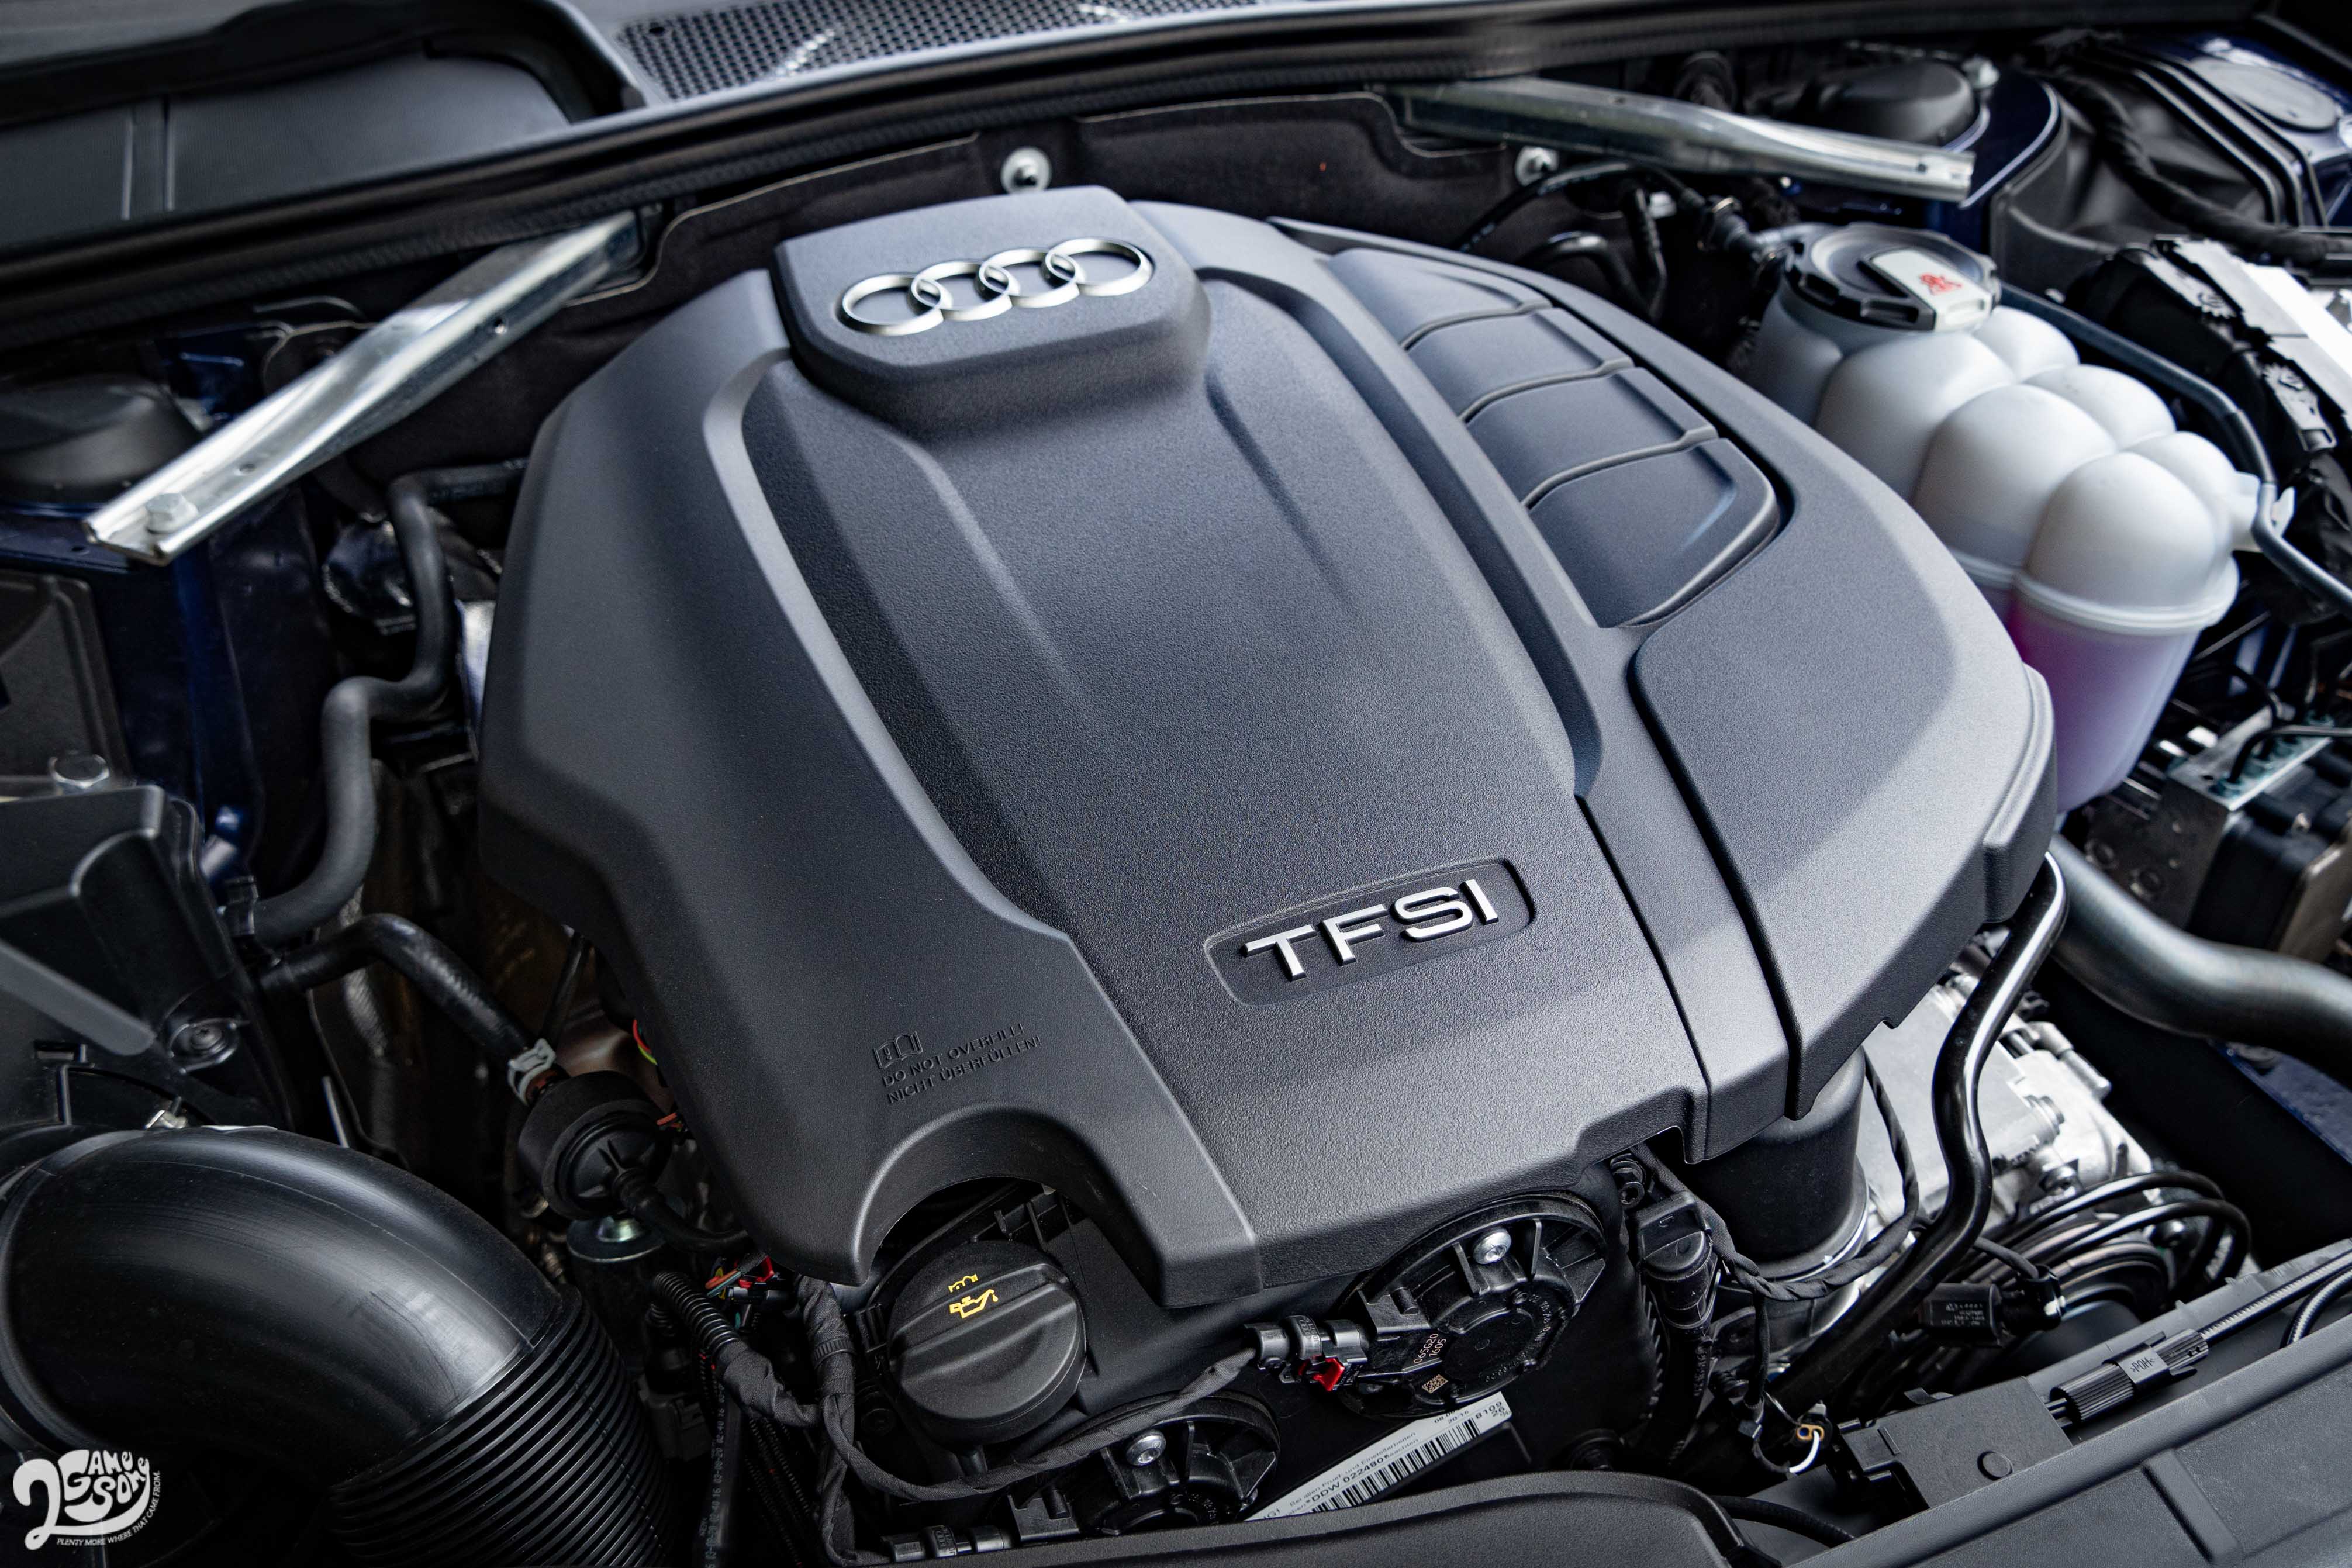 L4 汽油渦輪增壓引擎和 12V 輕油電系統搭配，最大馬力來到 249 匹，最大扭力 370 Nm。